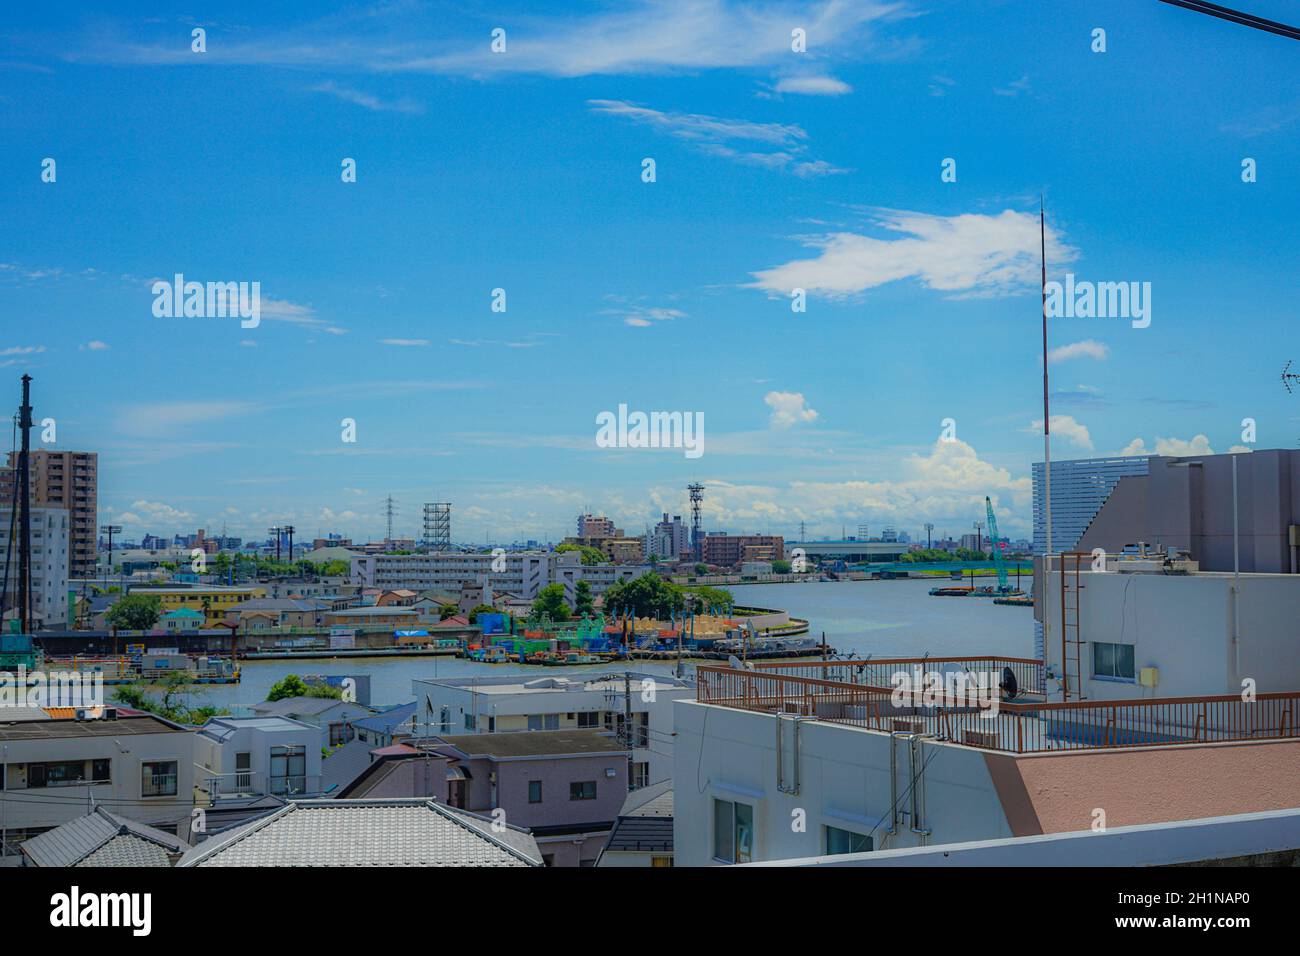 City and blue sky of Katsushika. Shooting Location: Tokyo metropolitan area Stock Photo